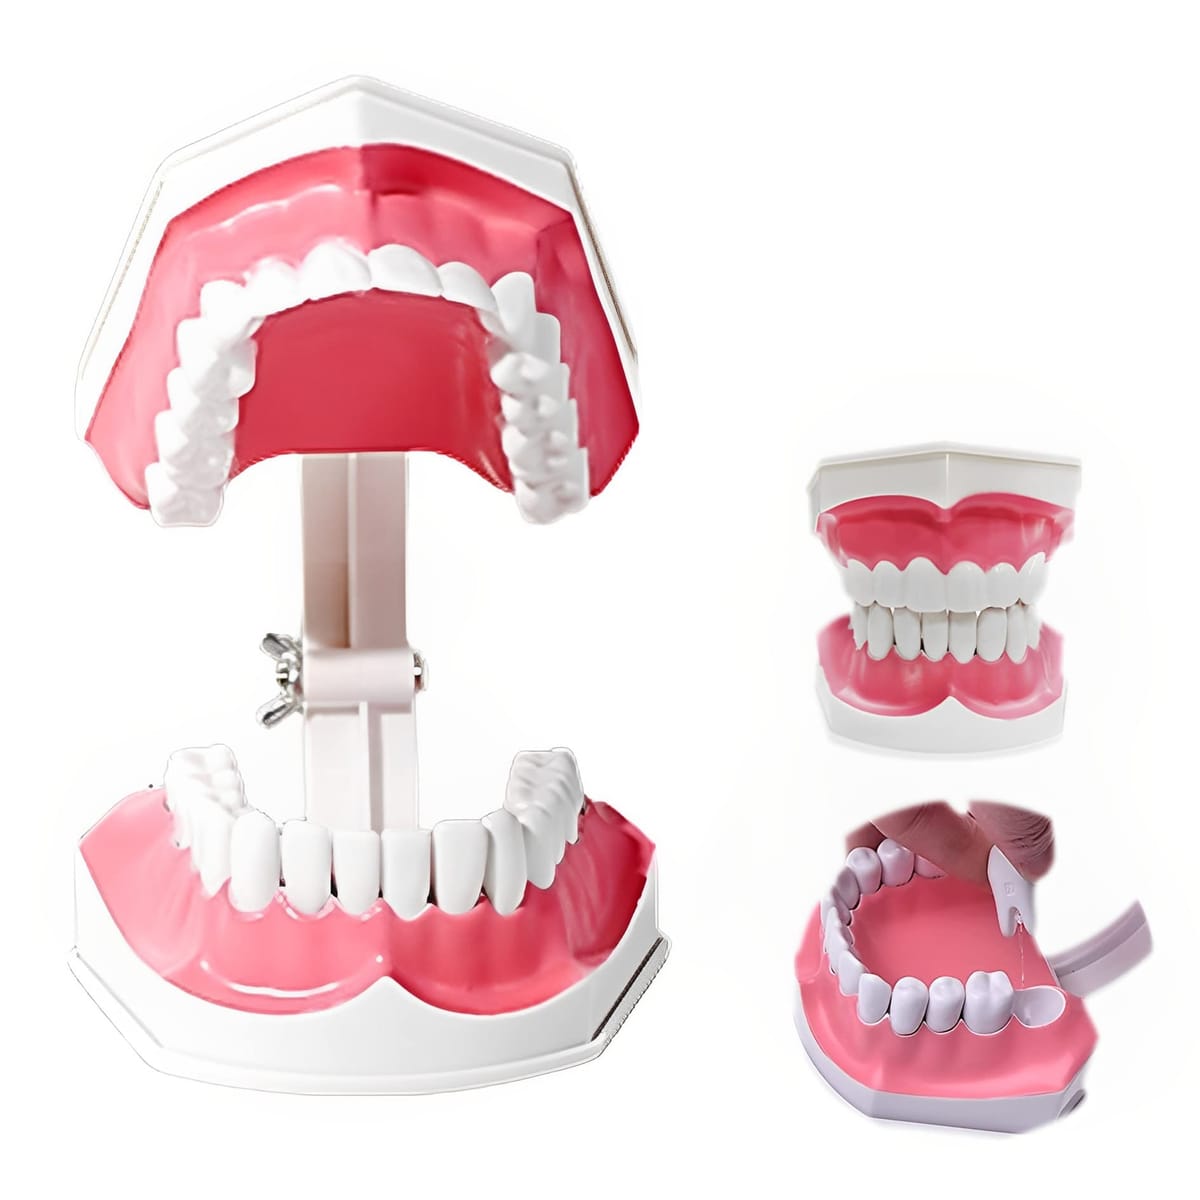 MIMIA 歯列模型 歯が抜ける 説明モデル 歯科インプラント 歯科模型 上下顎模型 治療 説明 取り外し可能 大きく開く 教育 学習 子供 歯 モデル 歯磨き指導 歯列矯正